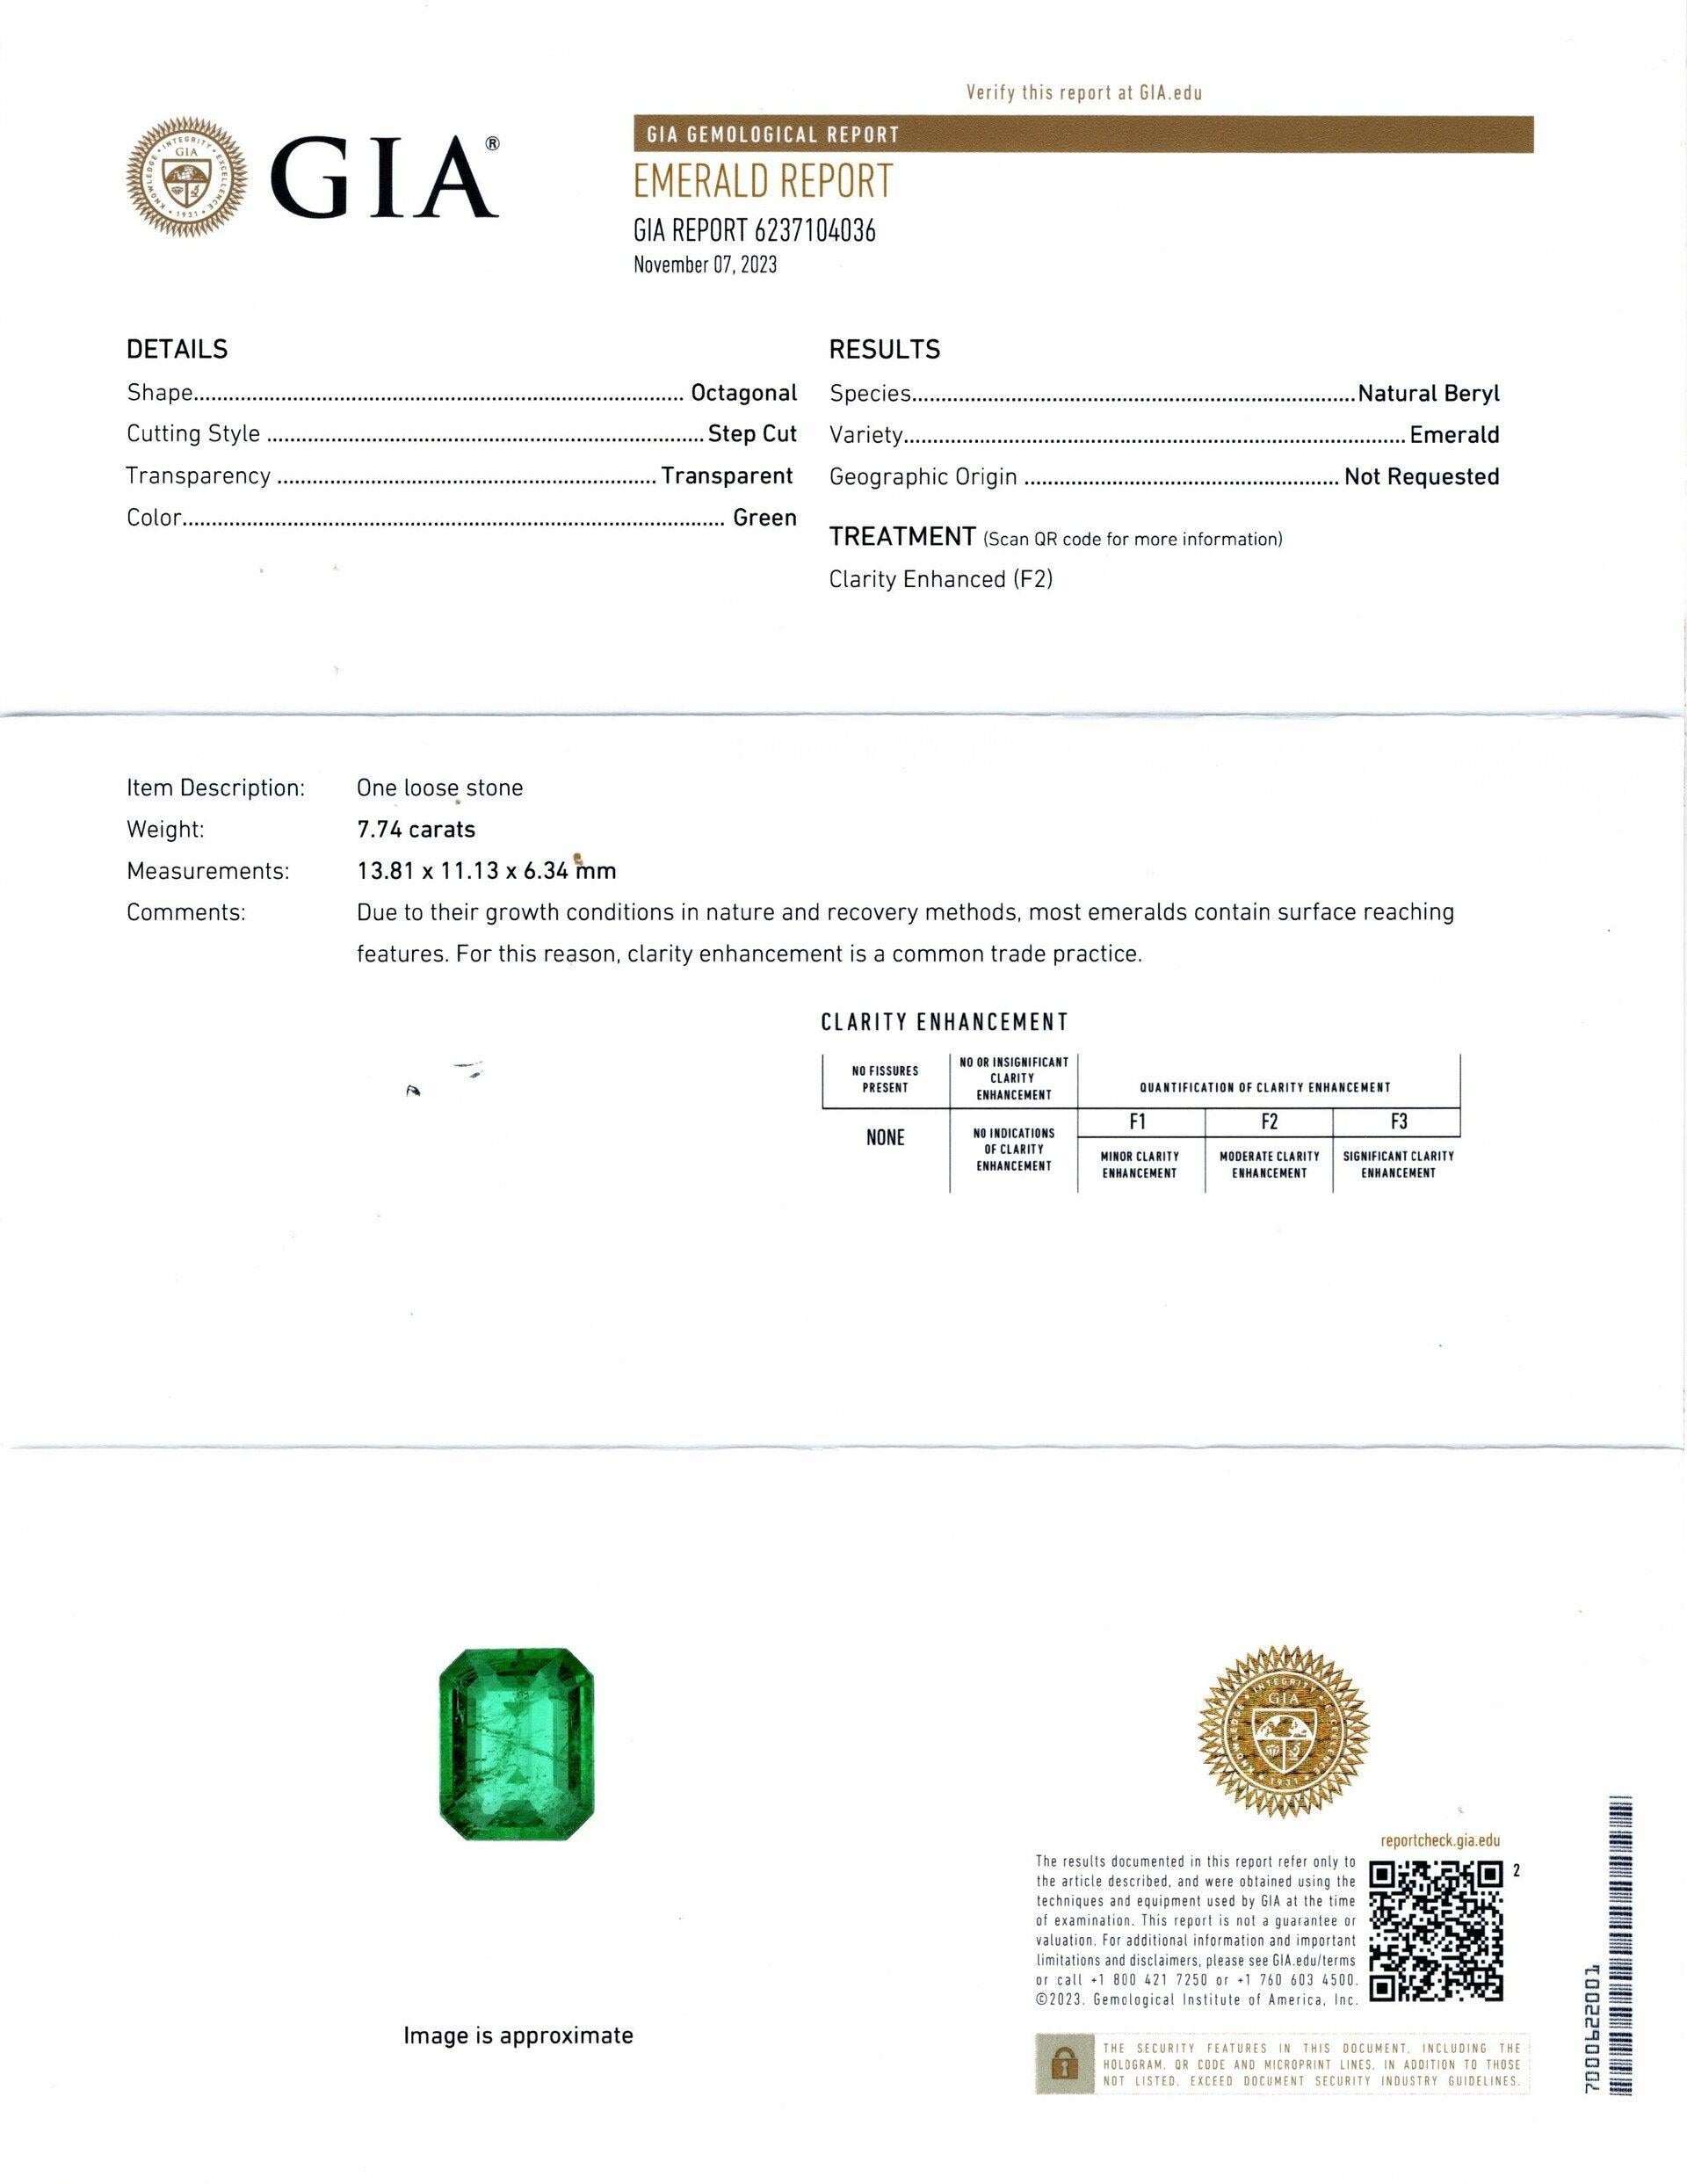 Emerald Cut GIA Certified 7.74 Carat Green Emerald Diamond Platinum Ring For Sale